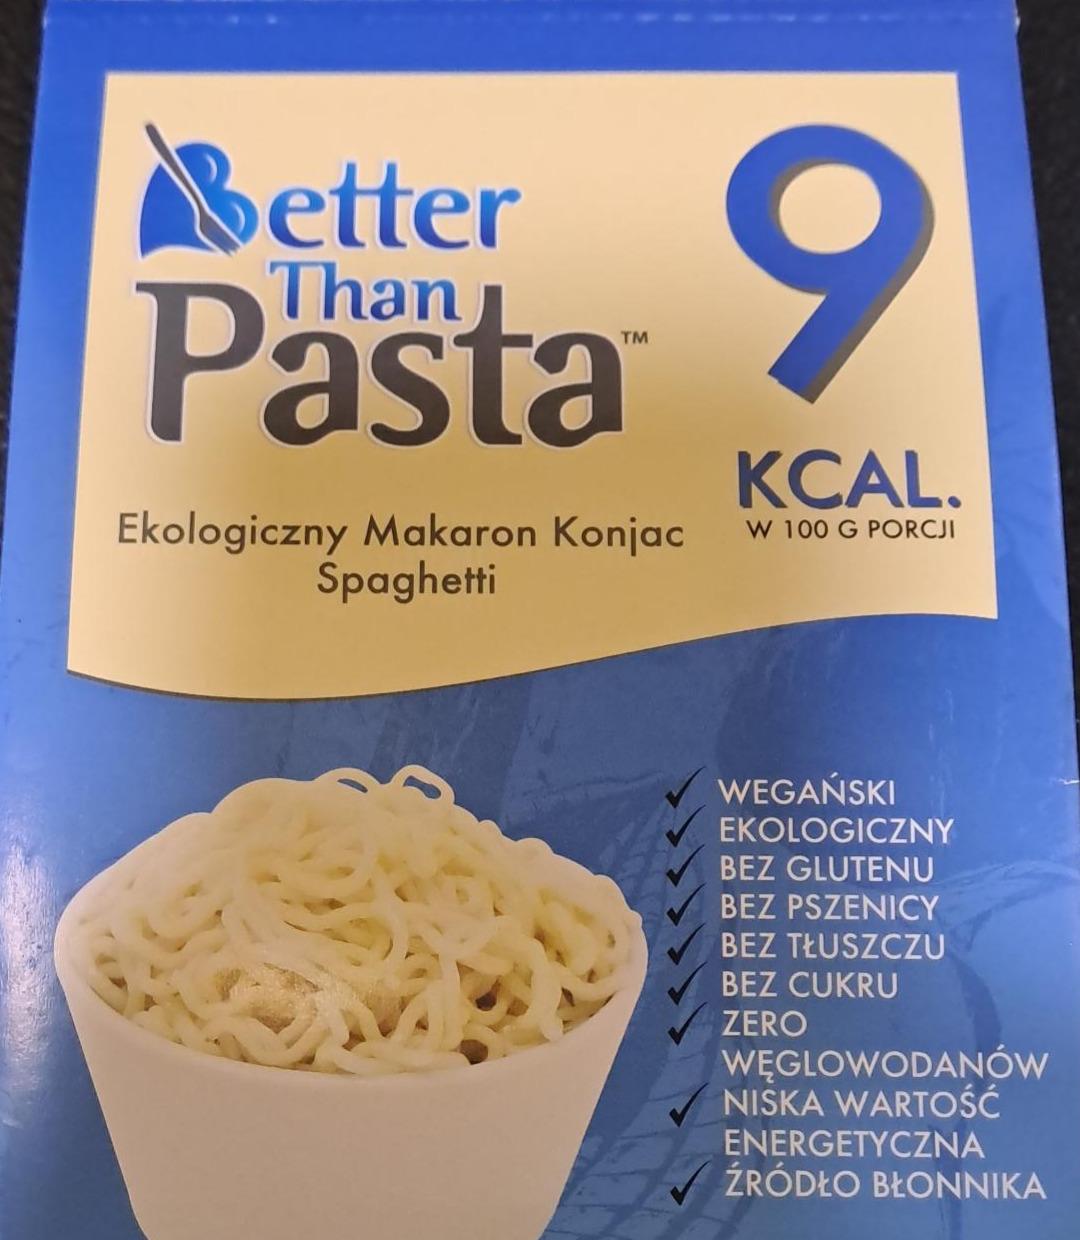 Zdjęcia - Ekologiczny makaron konjac spaghetti Better than pasta